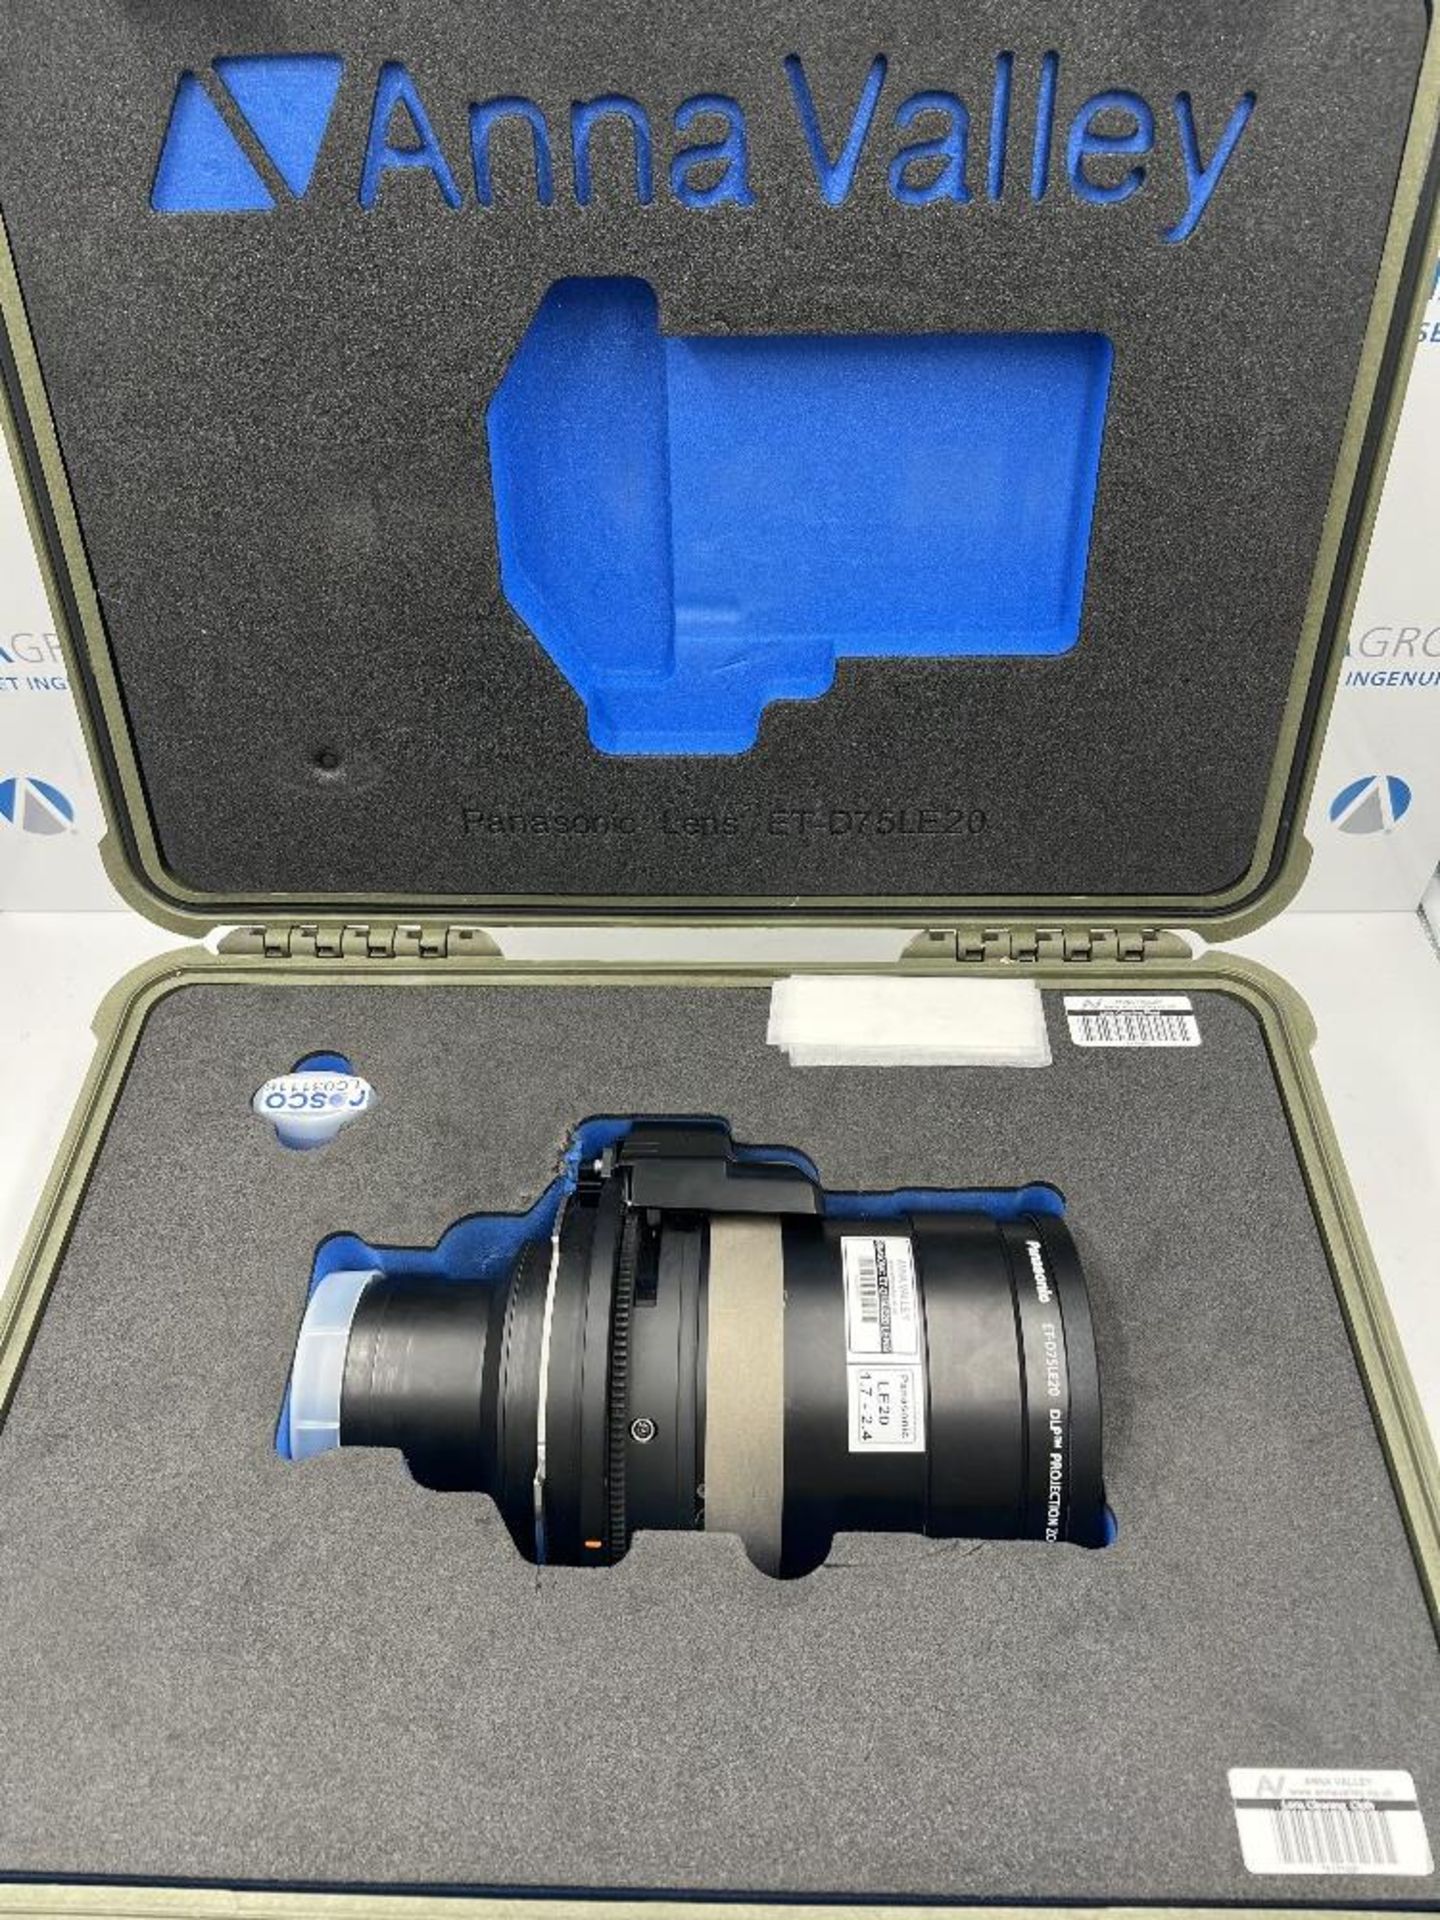 Panasonic ET-D75LE20 1.7-2.4 Zoom Lens With Carrier Case - Image 7 of 9